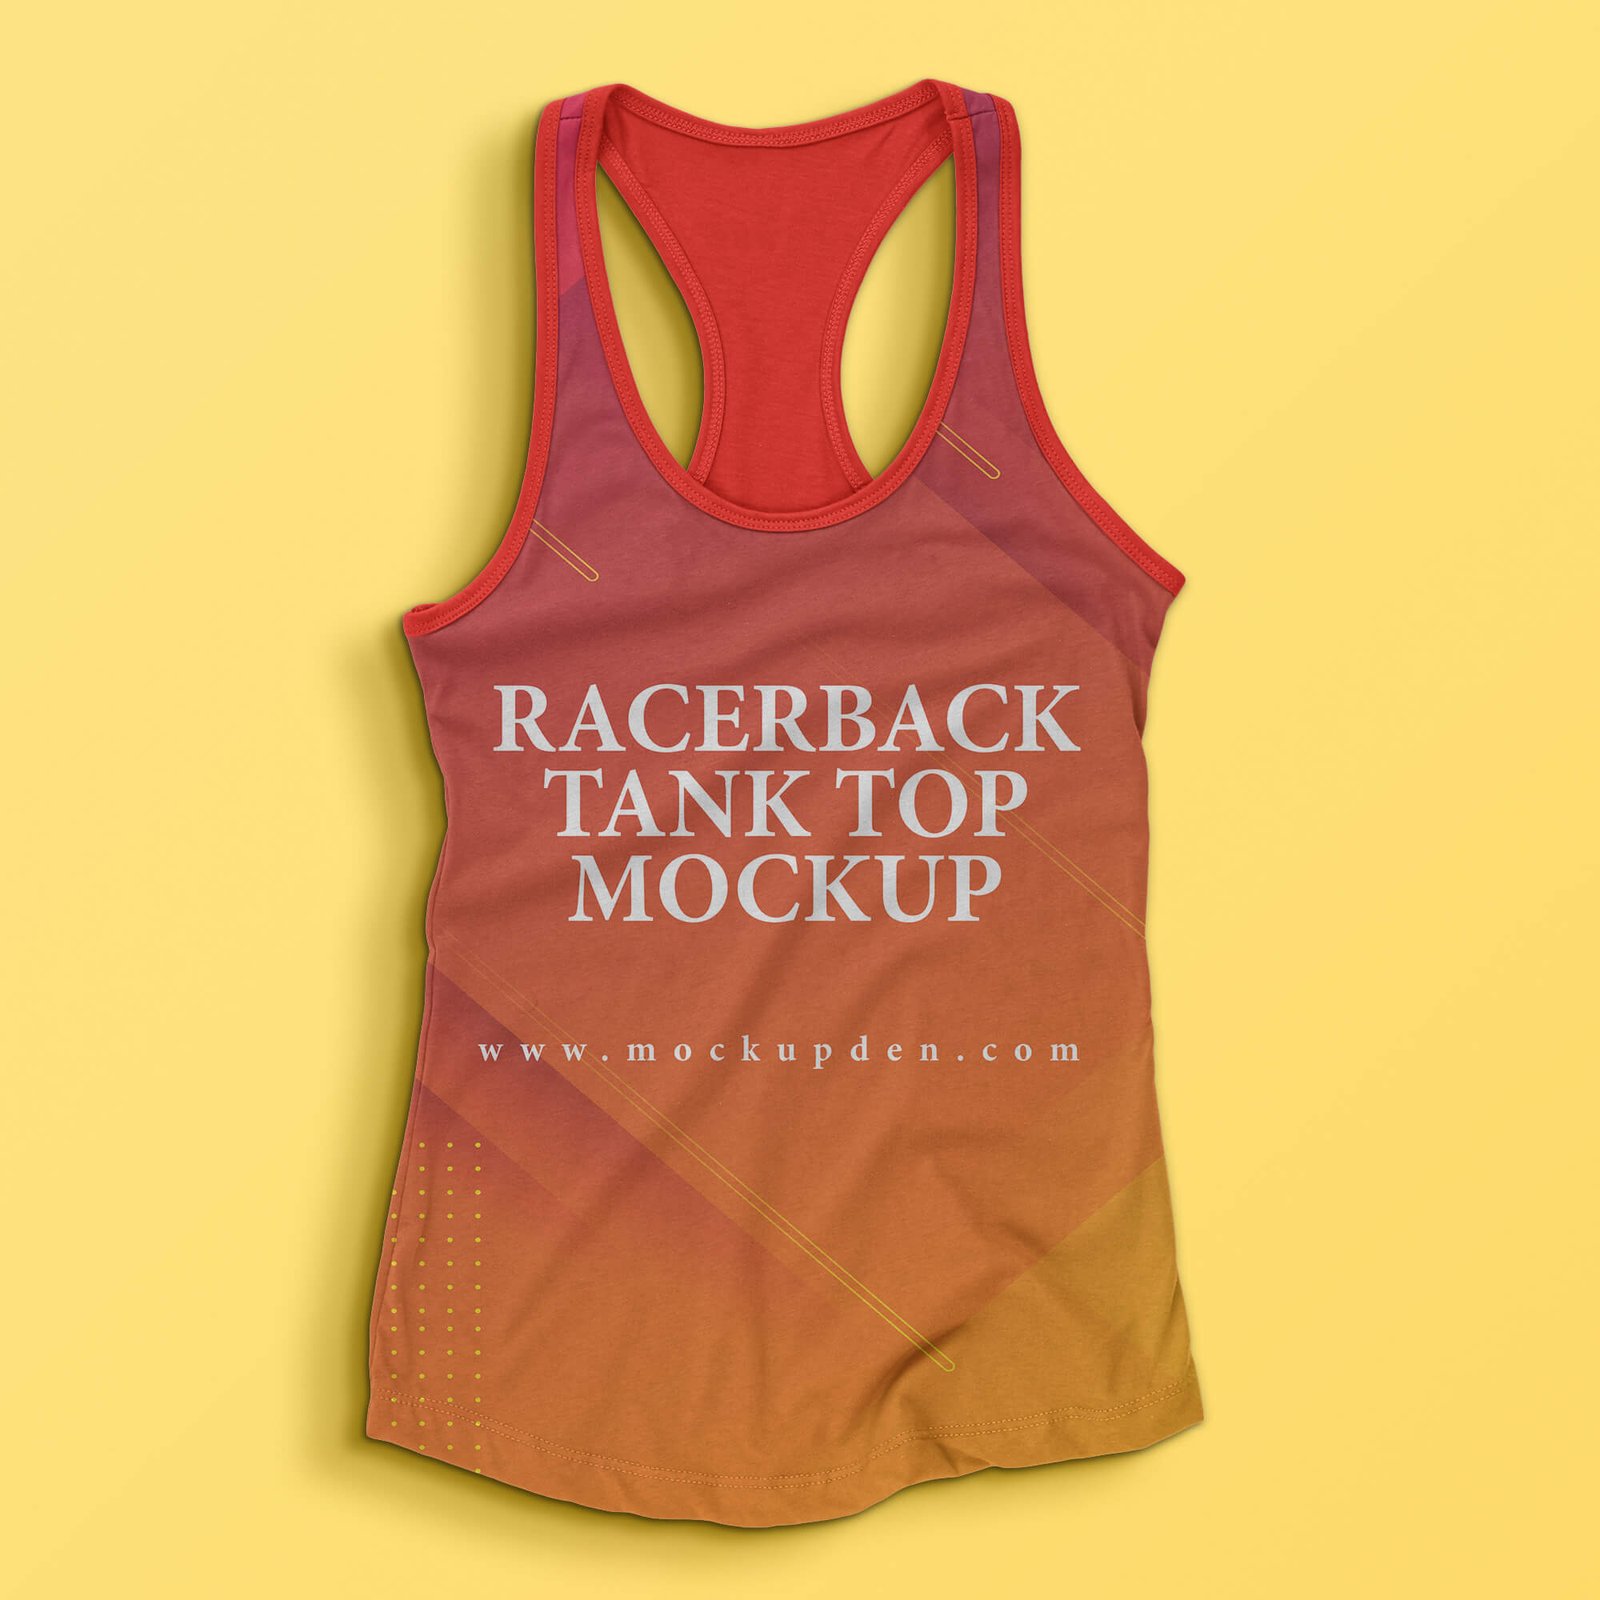 Free Racerback Tank Top Mockup PSD Template